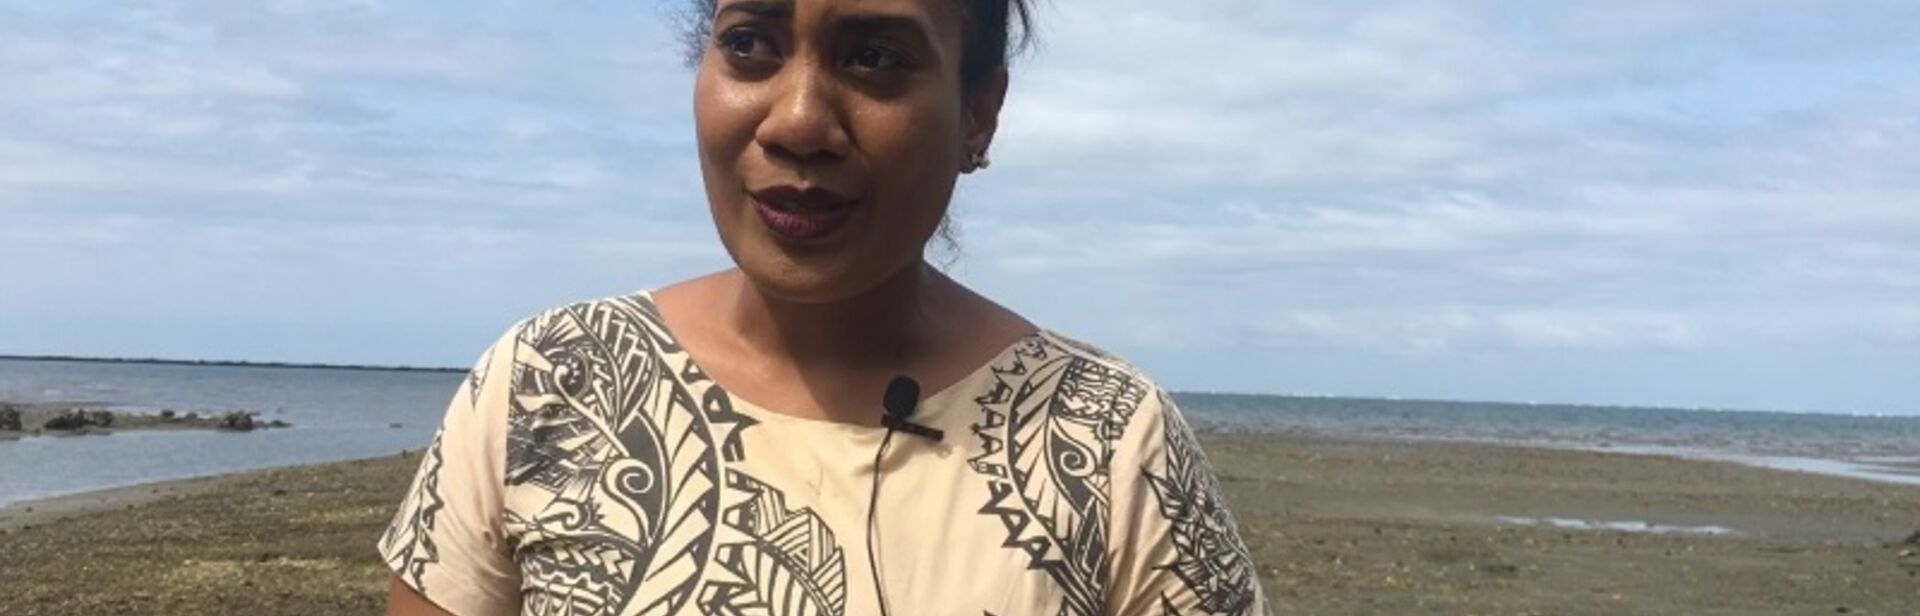 Workshop in Suva, Fiji: Strengthening Media Capacity on Climate Change Reporting